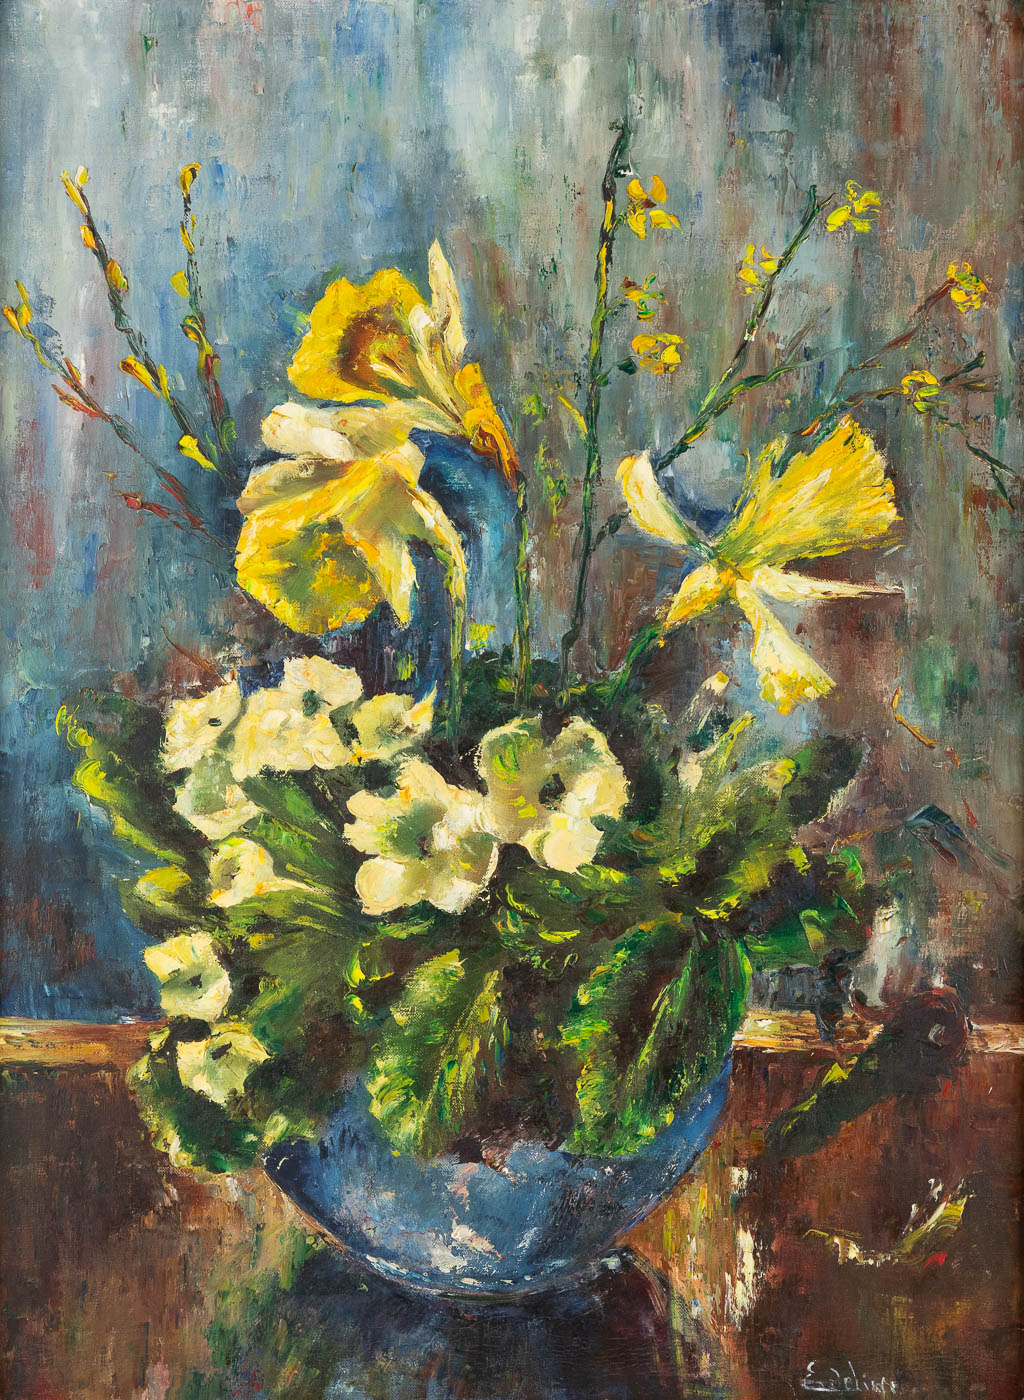 Guillaume EDELINE (1902-1987) 'Flowers' oil on canvas. (W:60 x H:80 cm)